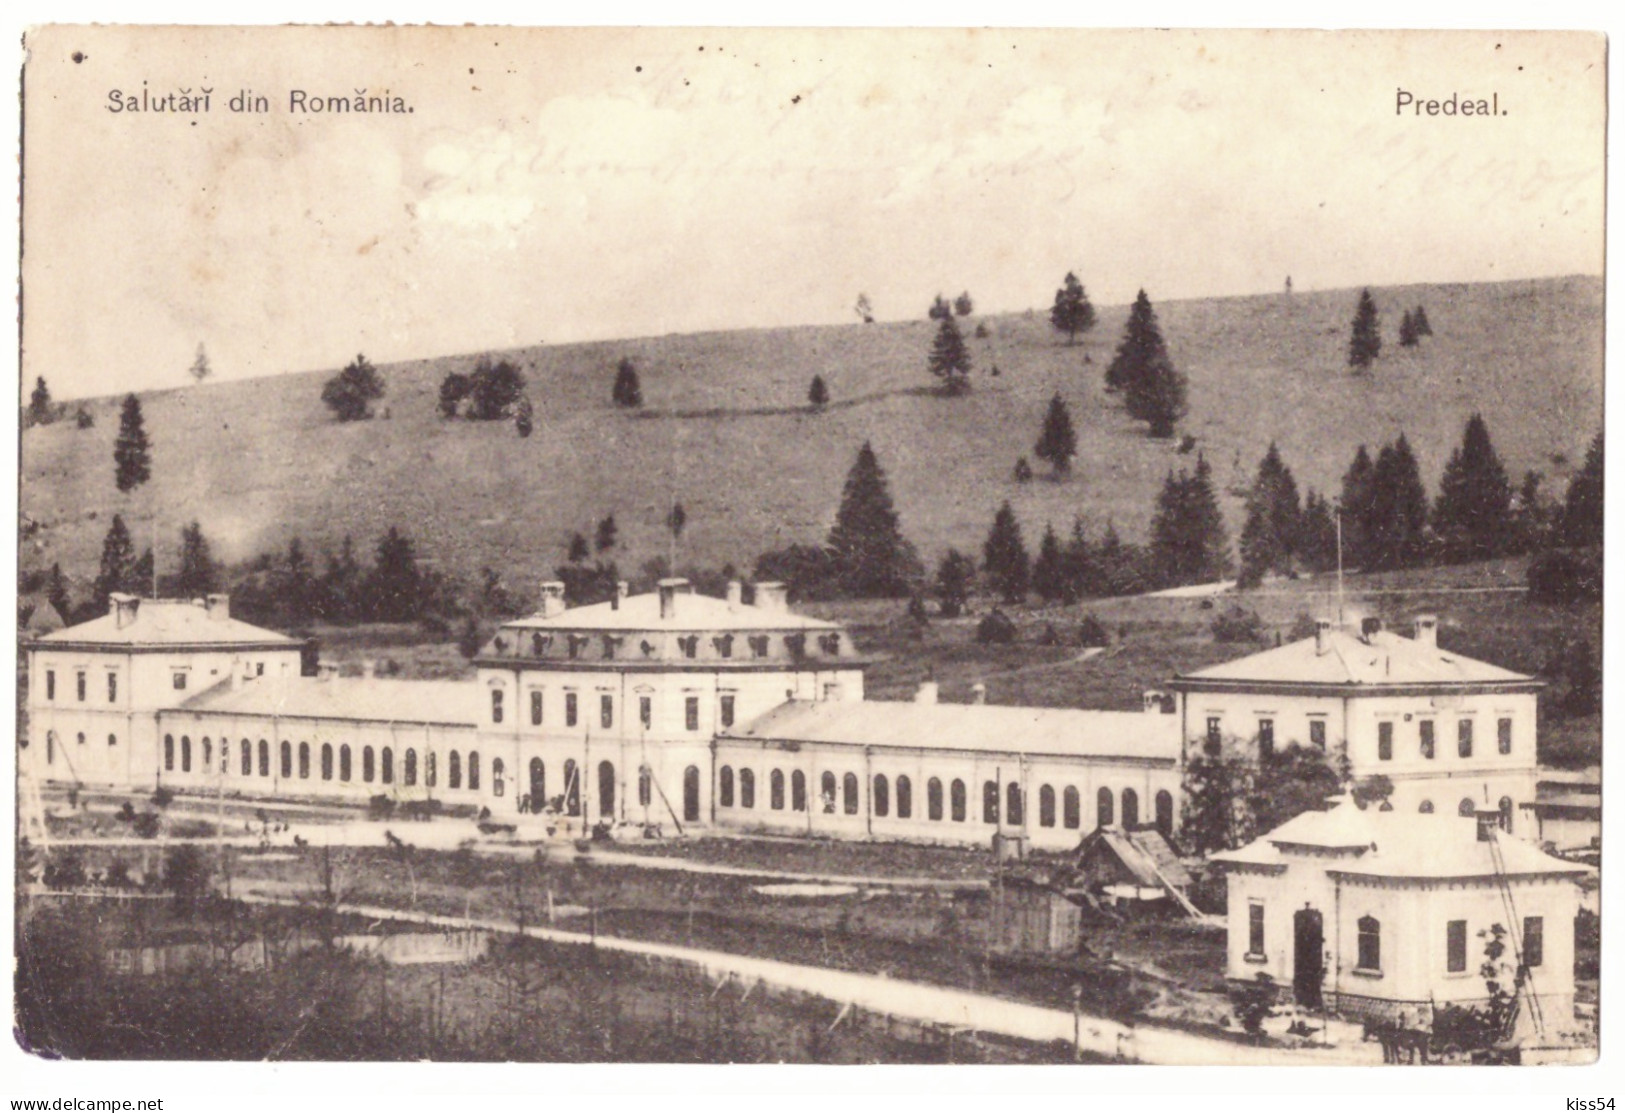 RO 83 - 21110 PREDEAL, Brasov, Romania - Old Postcard - Used - 1906 - Romania